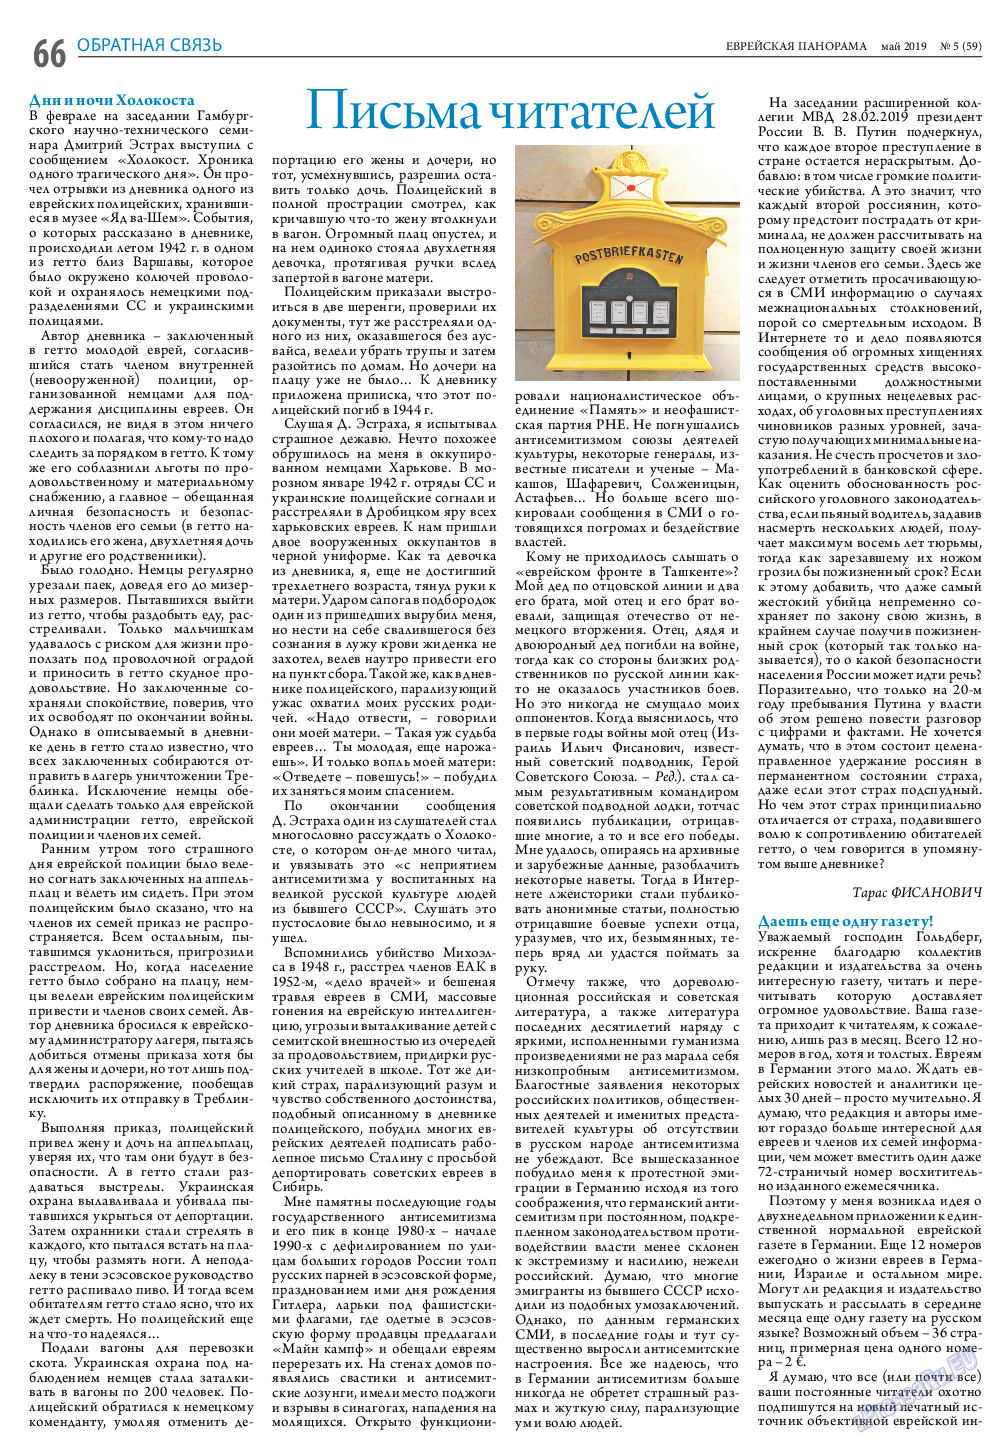 Еврейская панорама, газета. 2019 №5 стр.66